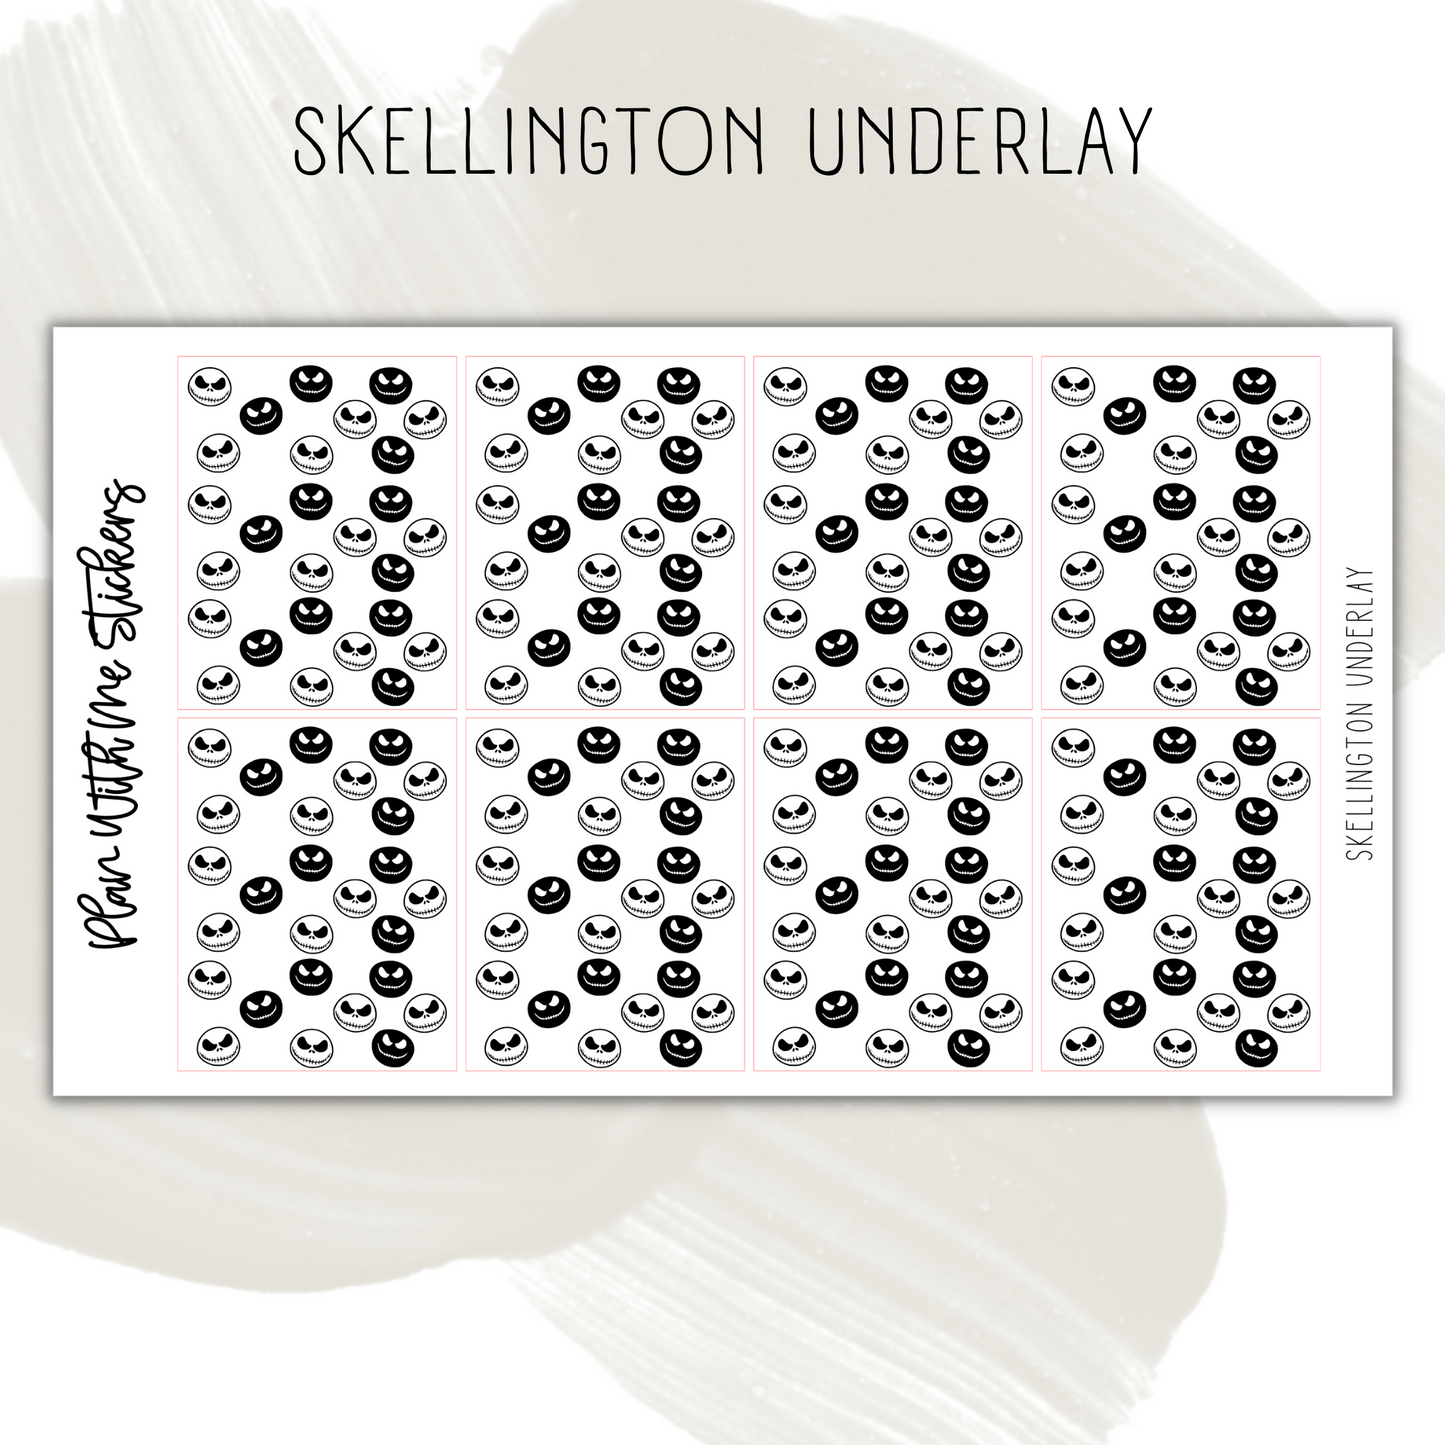 Skellington Underlay